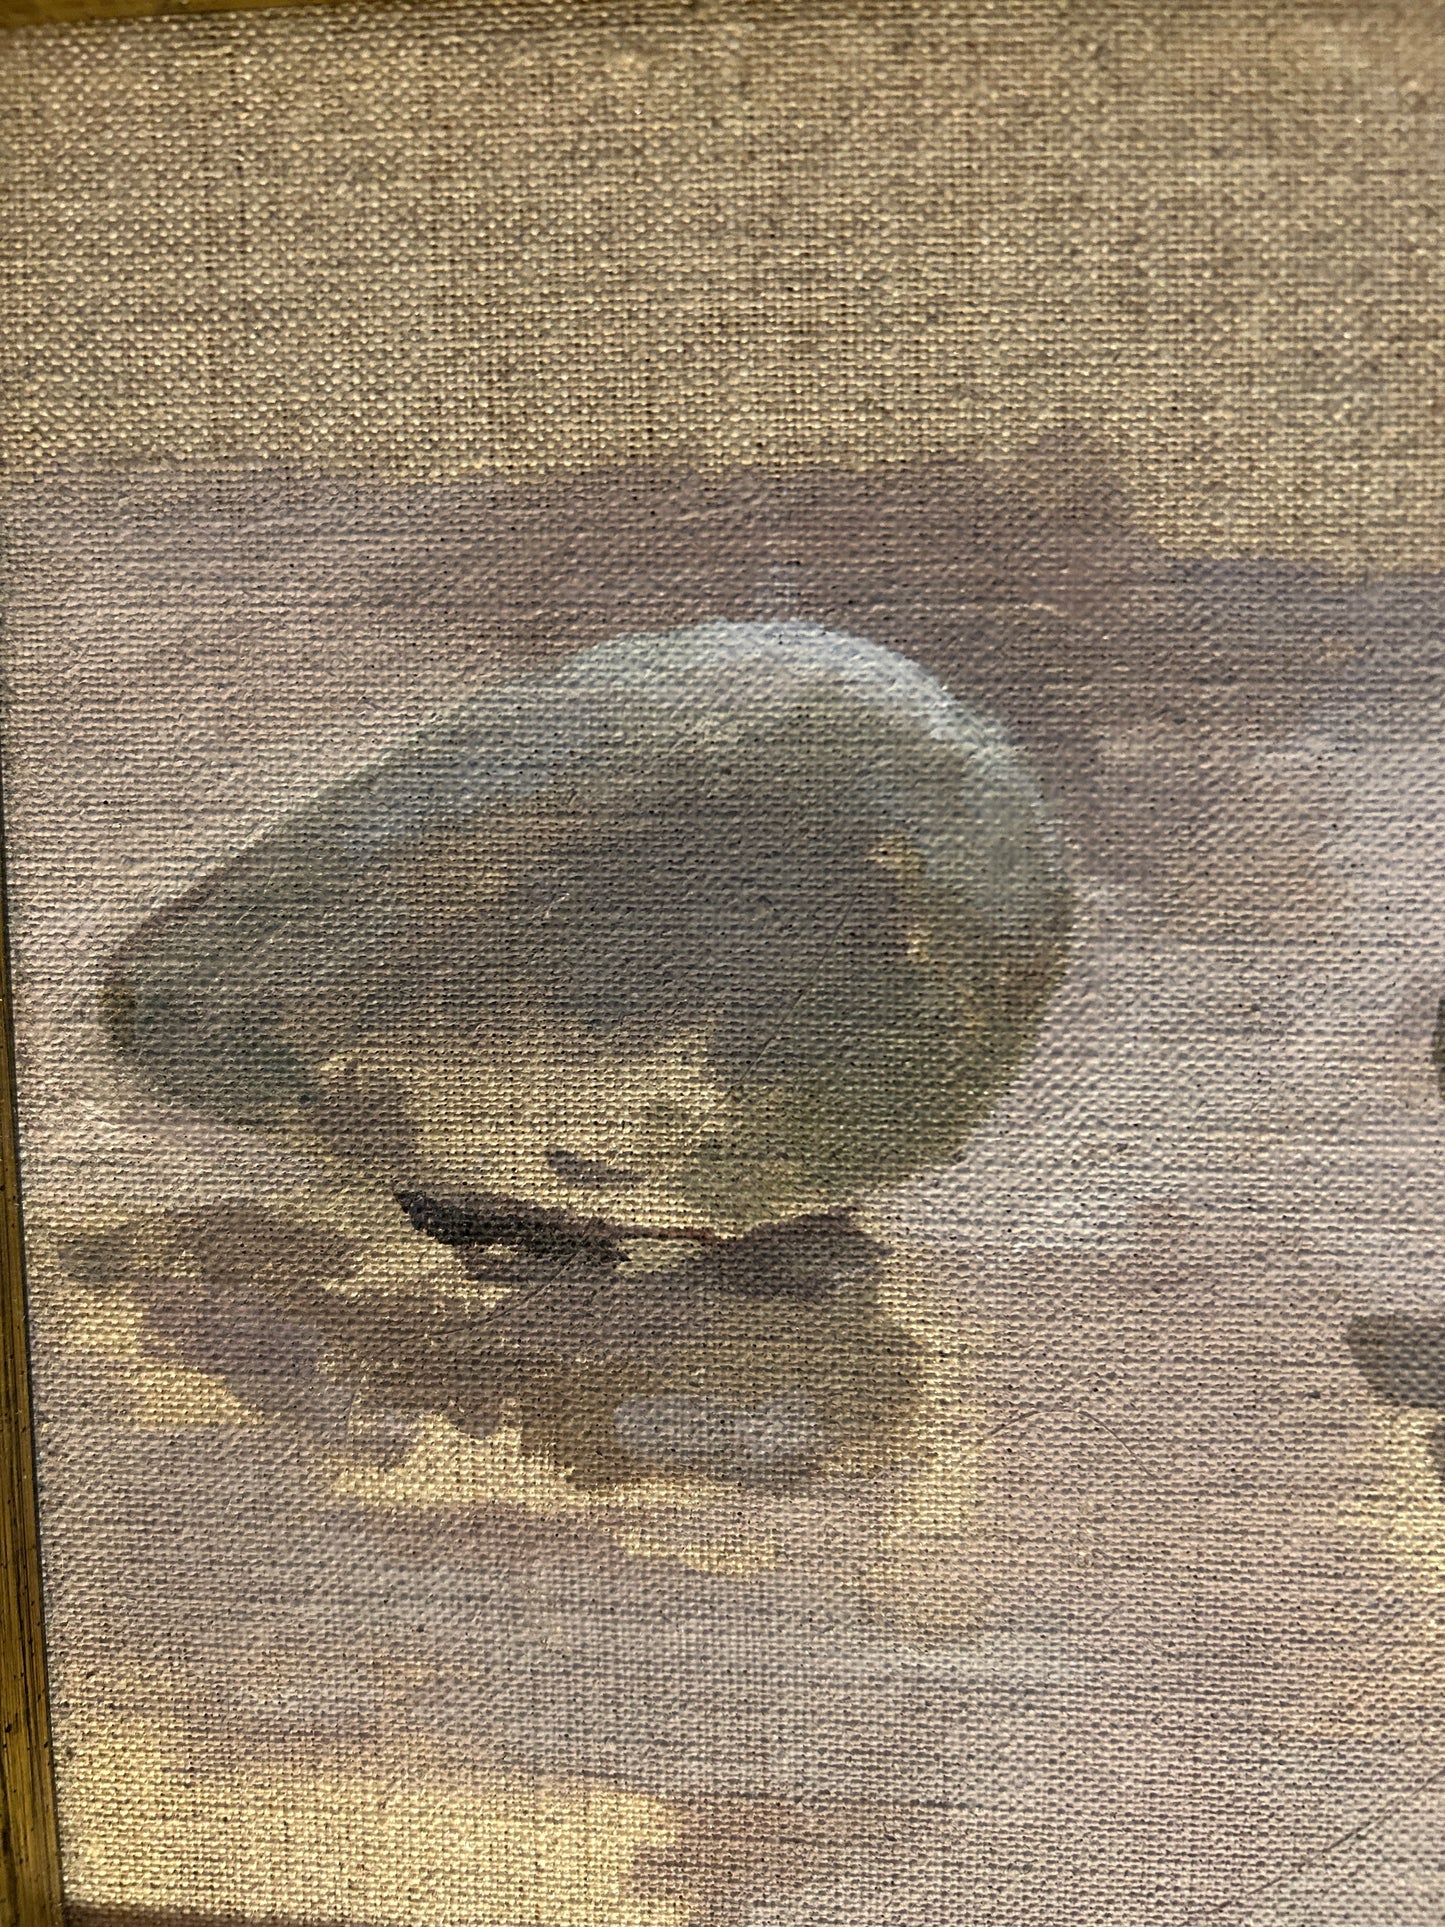 Still Life of Three Quails Eggs Oil on Canvas